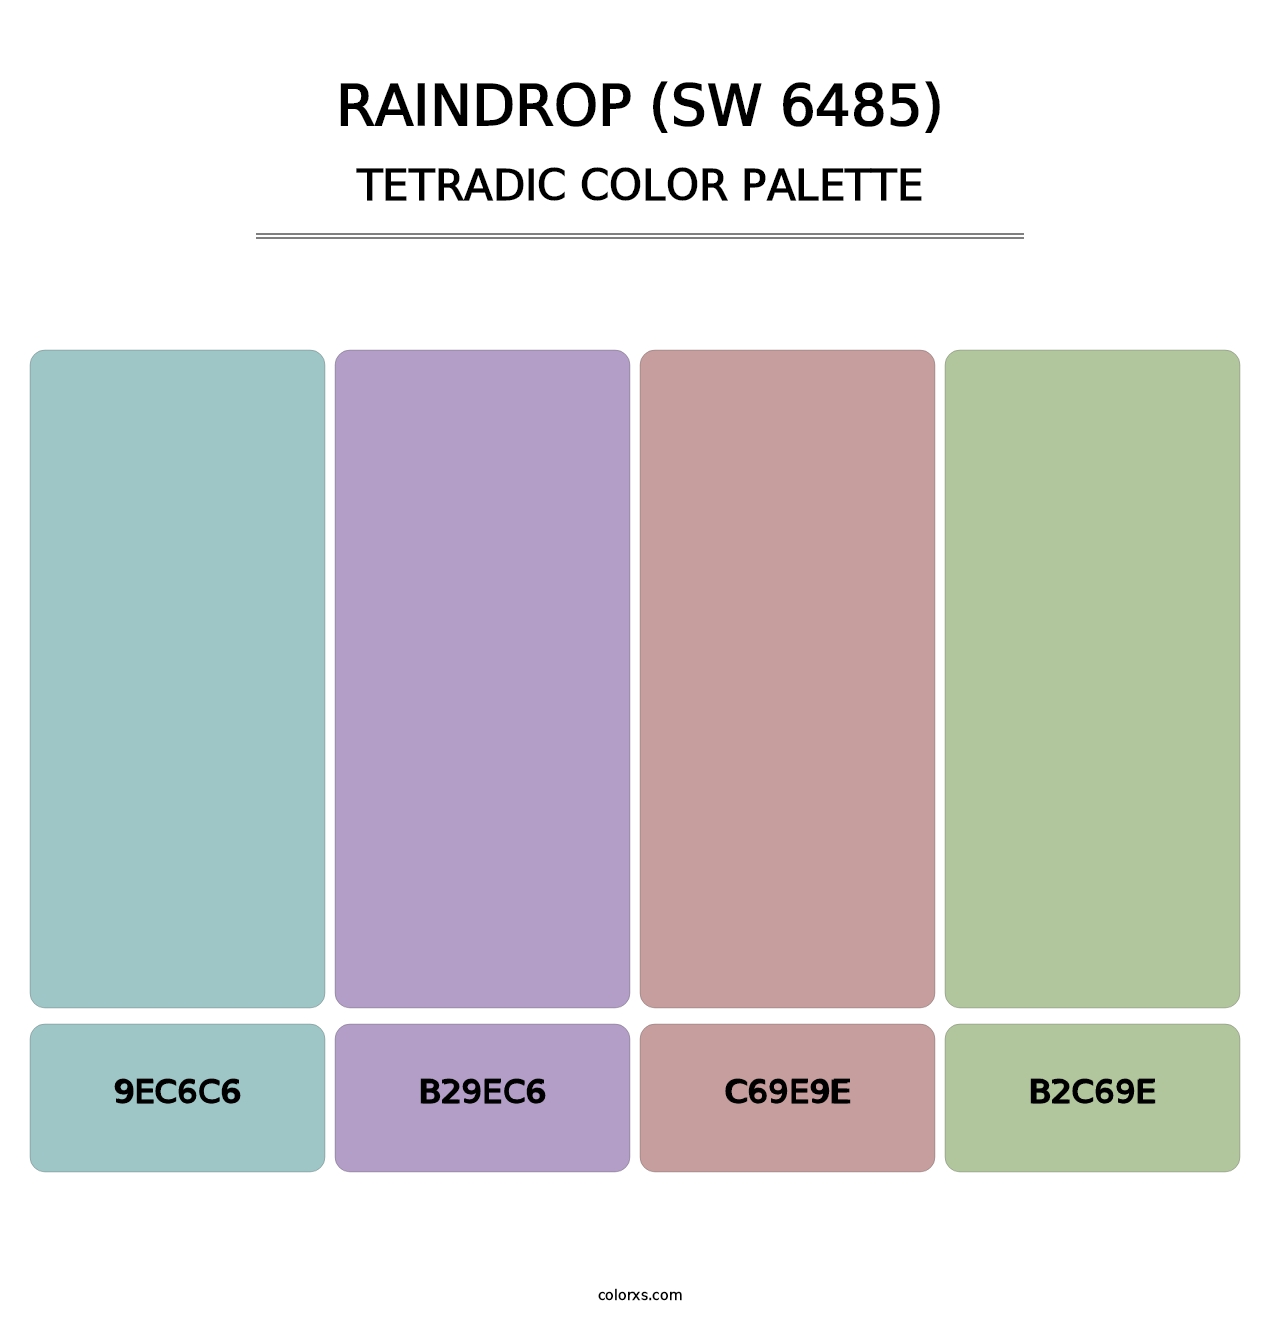 Raindrop (SW 6485) - Tetradic Color Palette